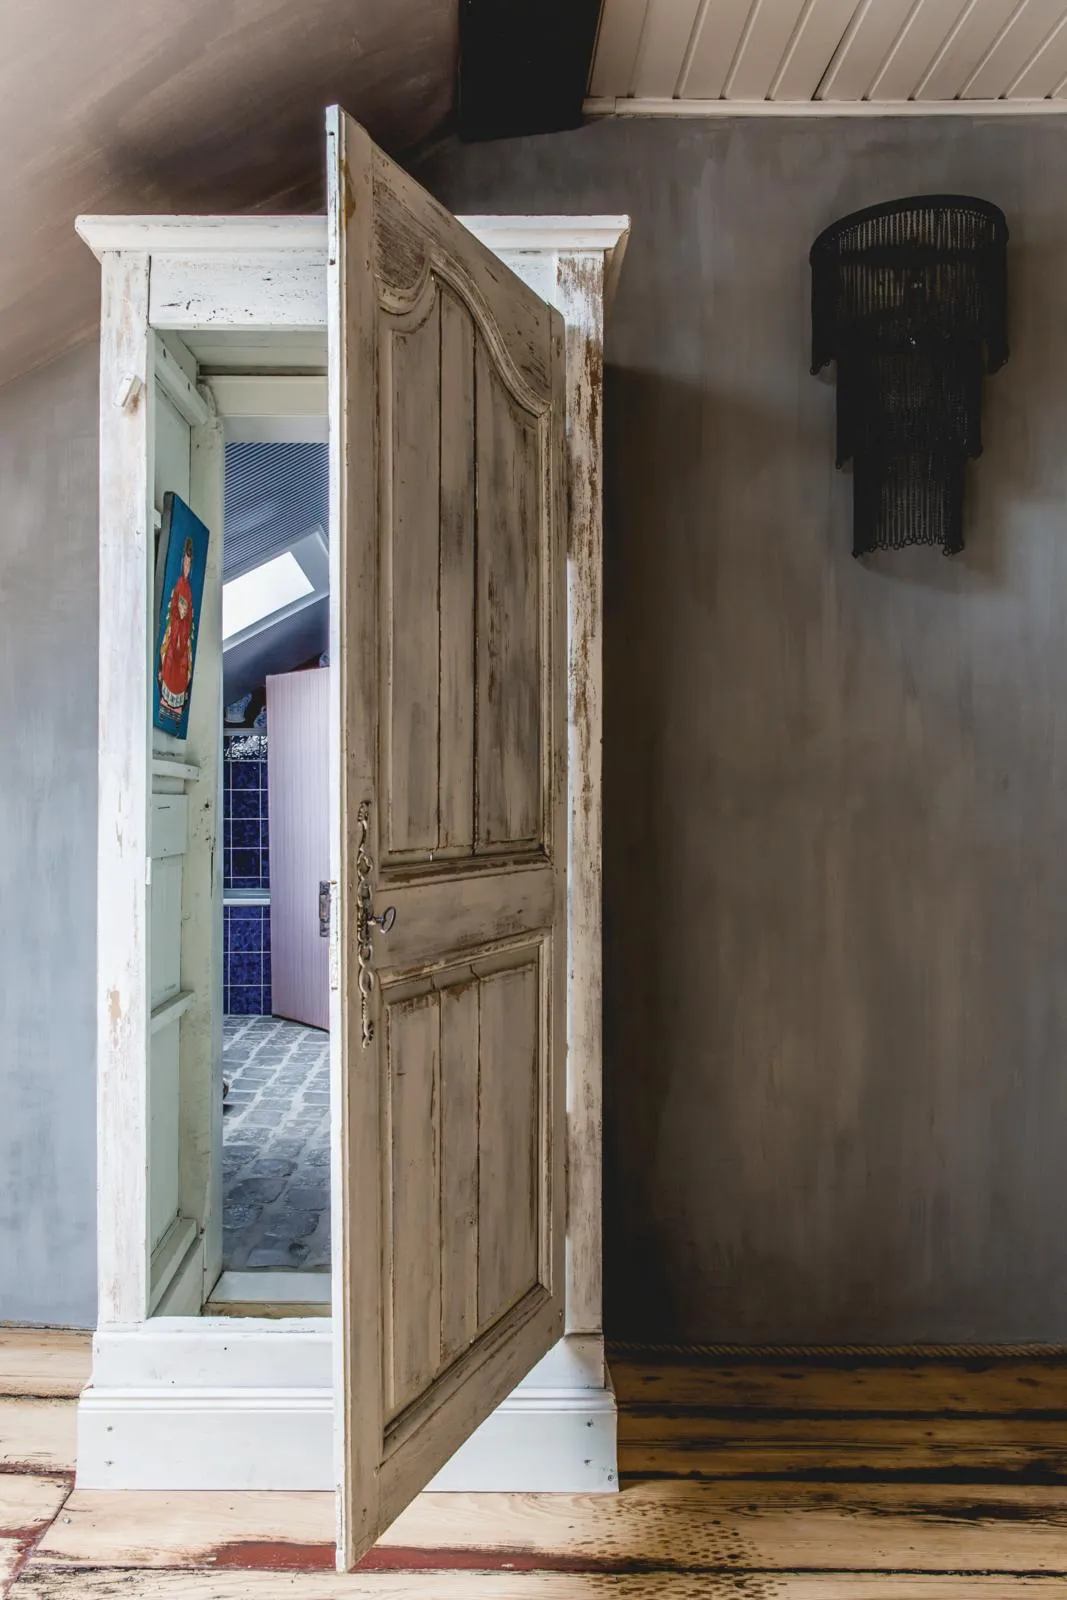 Restored coachman's cottage Narnia-like doorway